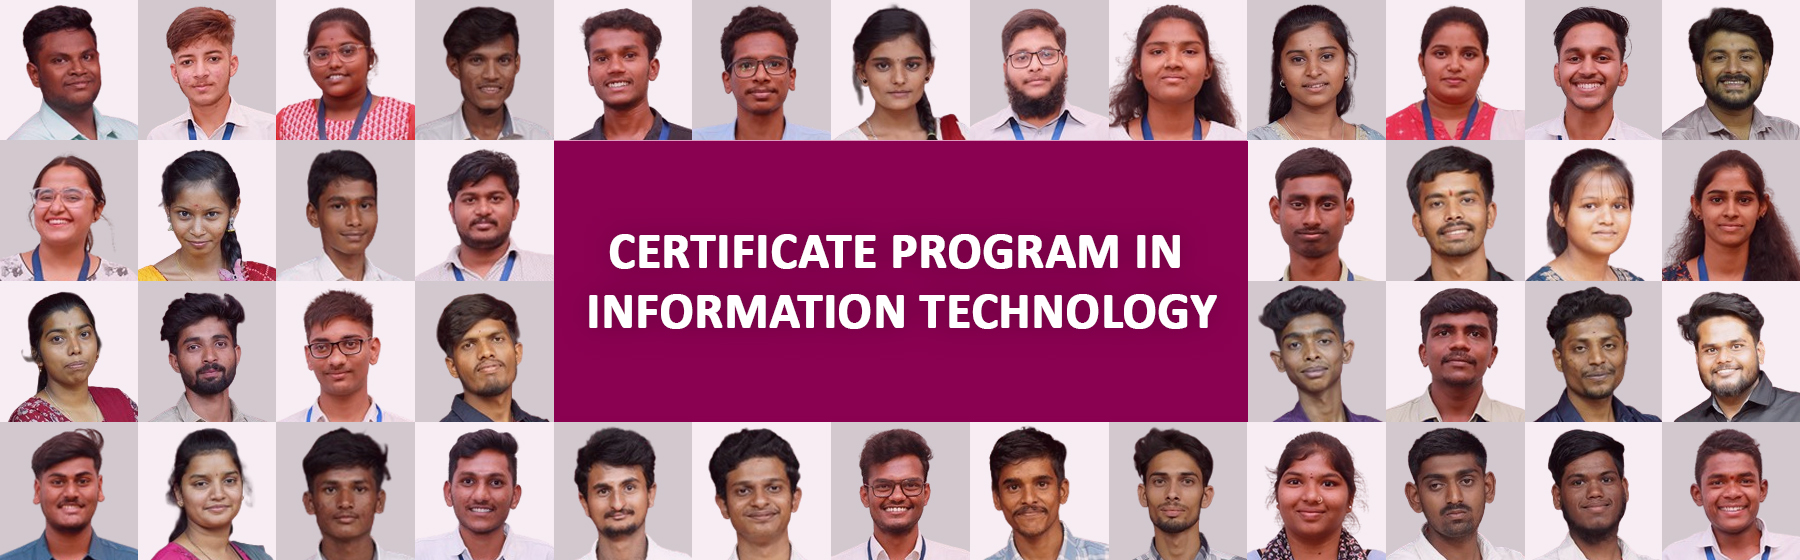 Certificate Program in Information Technology